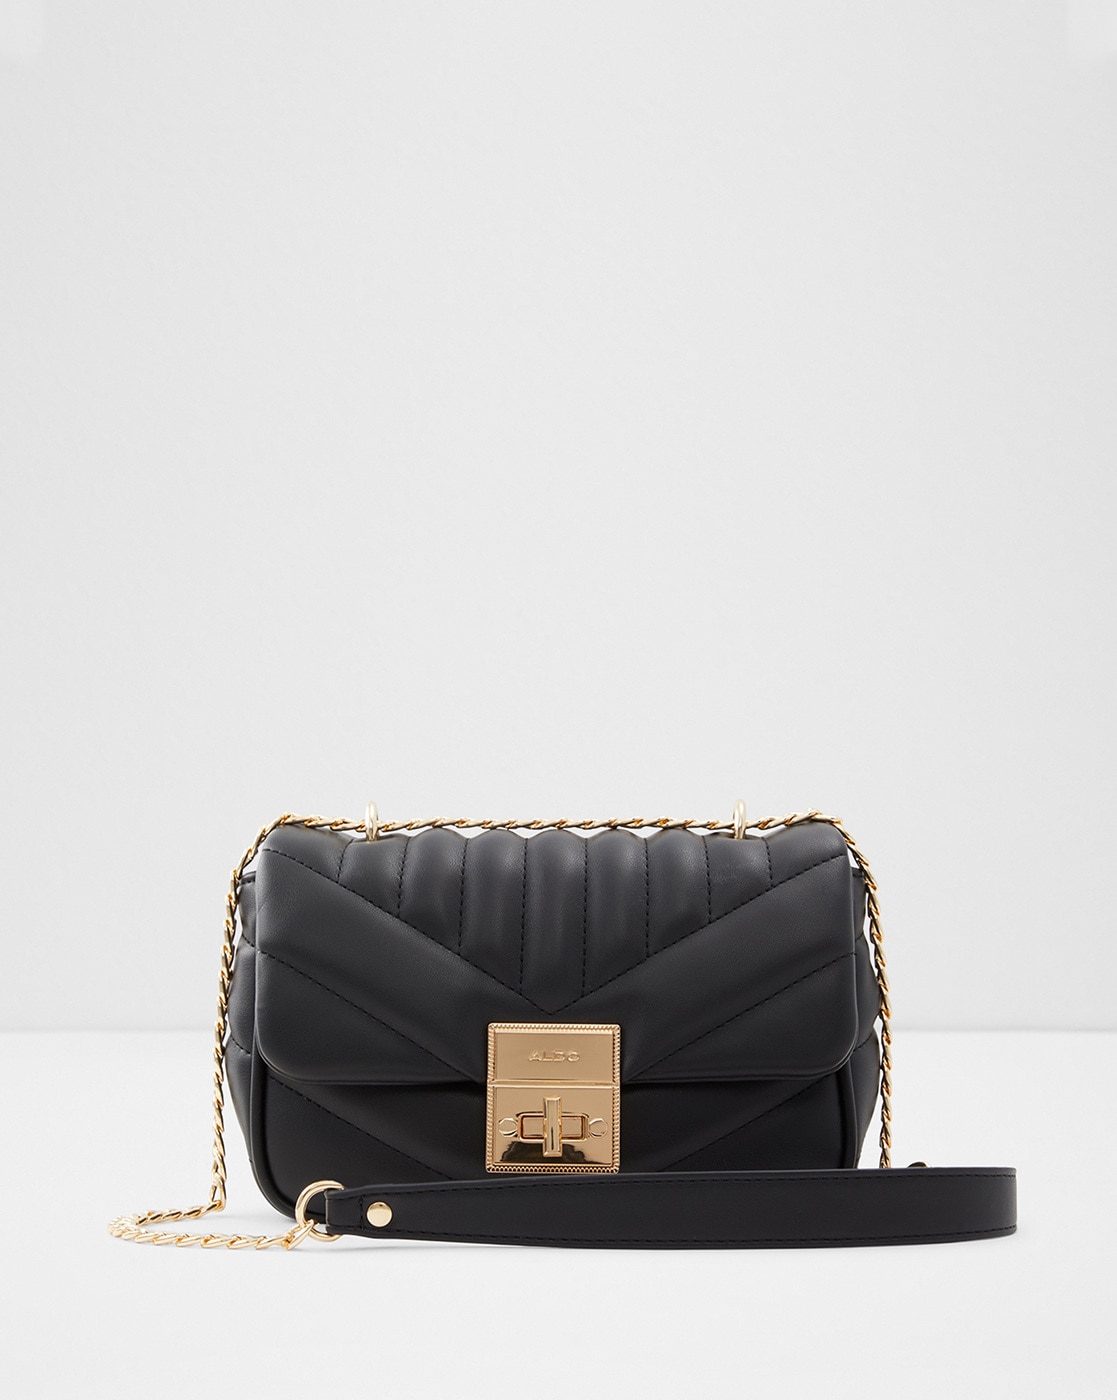 Aldo Women's Sling Bag (Black) : Amazon.in: Fashion